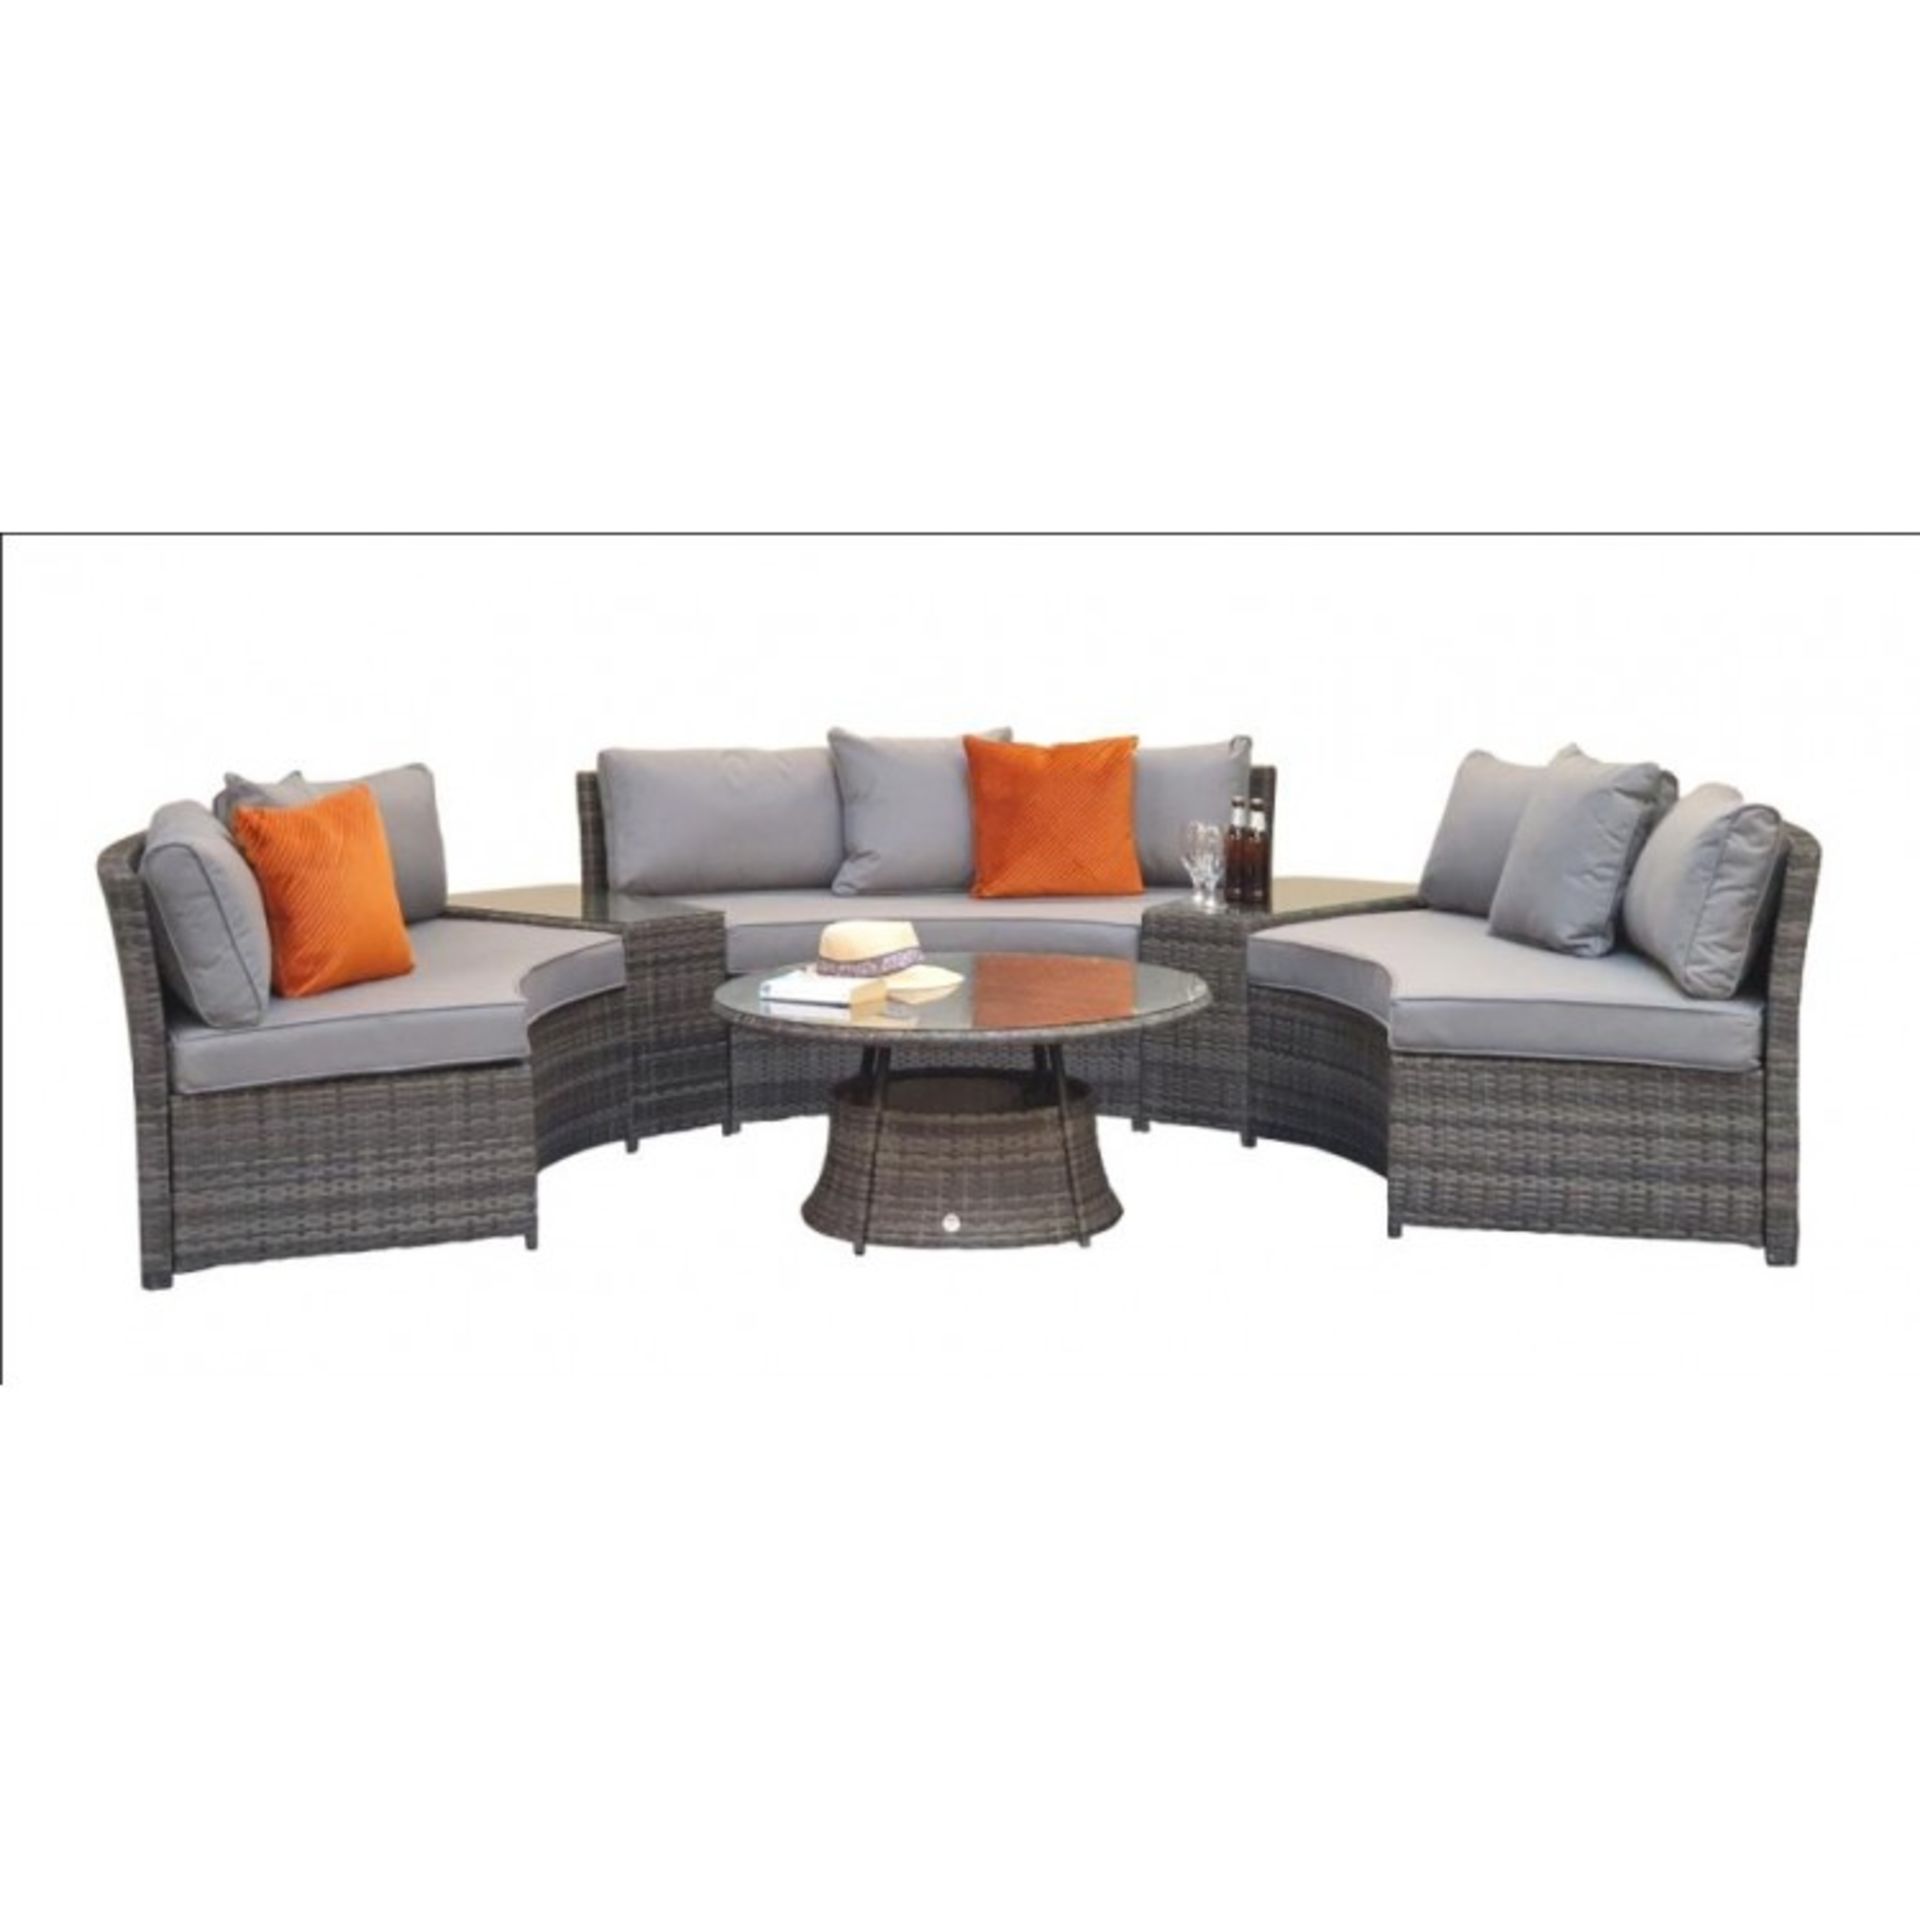 New & Boxed Luxury Signature Weave Garden Furniture - Juliet Grey Half Moon Sofa Set. RRP £2,999. - Image 3 of 6